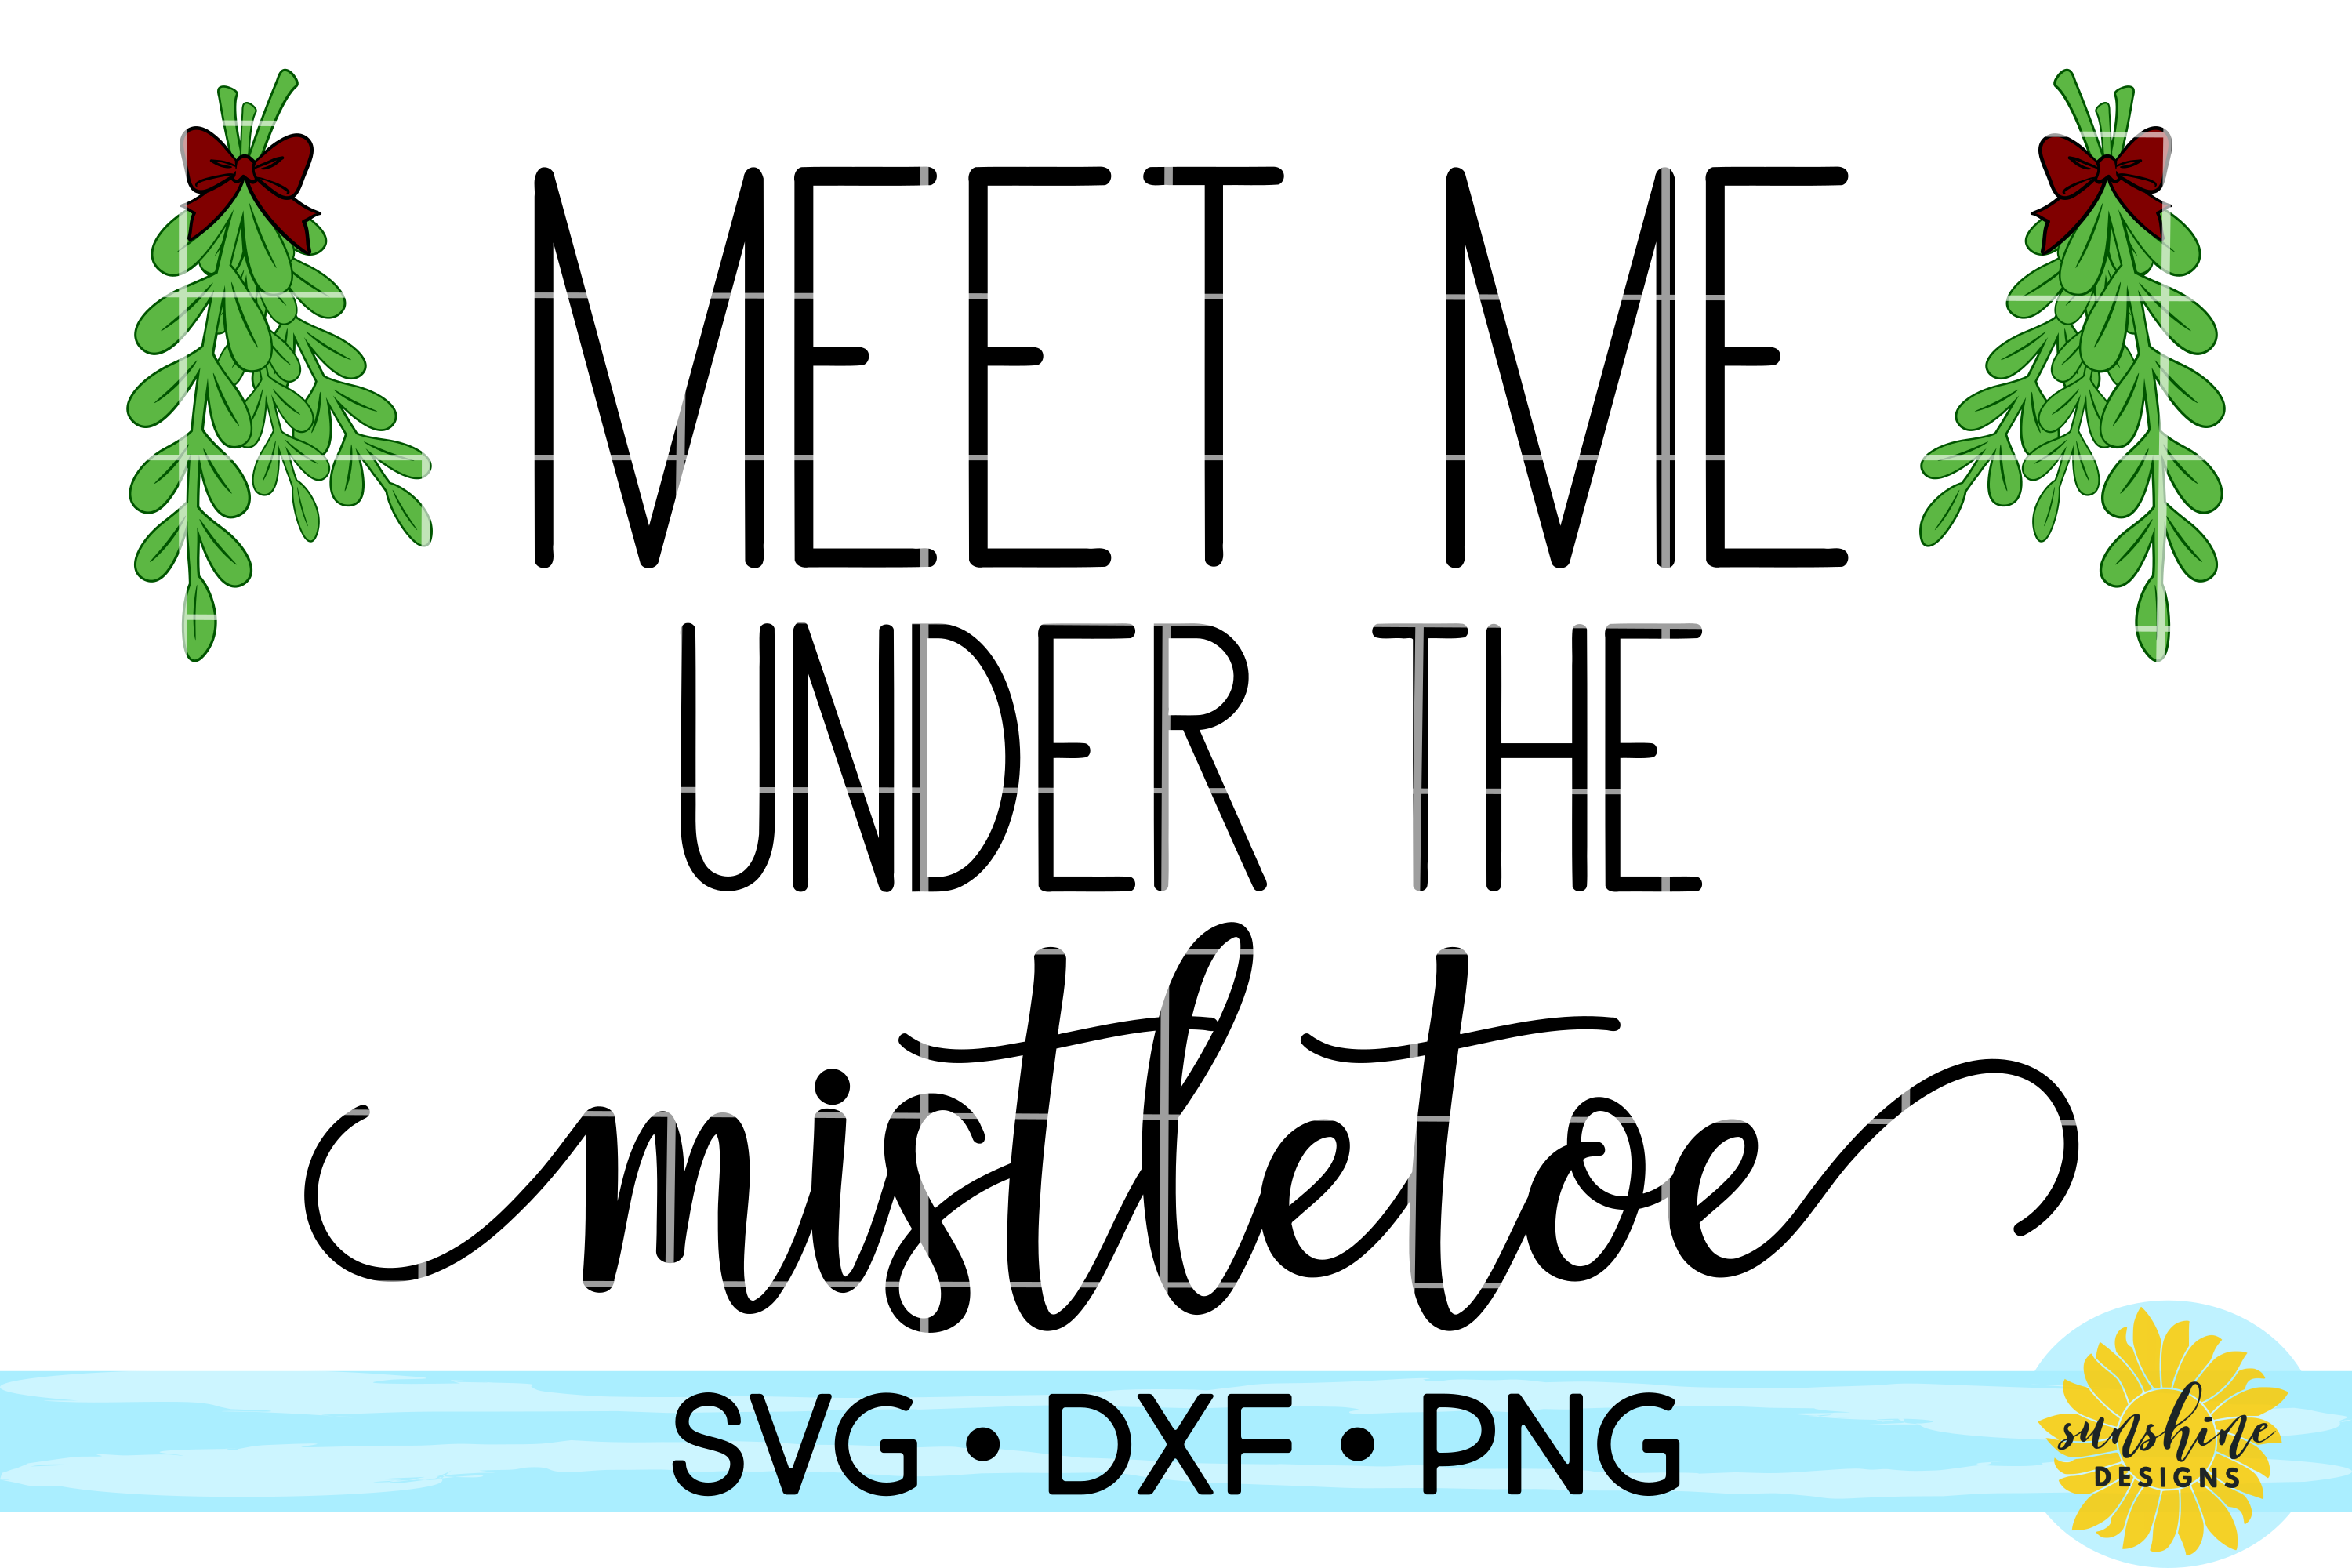 MEET ME UNDER THE MISTLETOE CHRISTMAS SIGN SVG DXF PNG